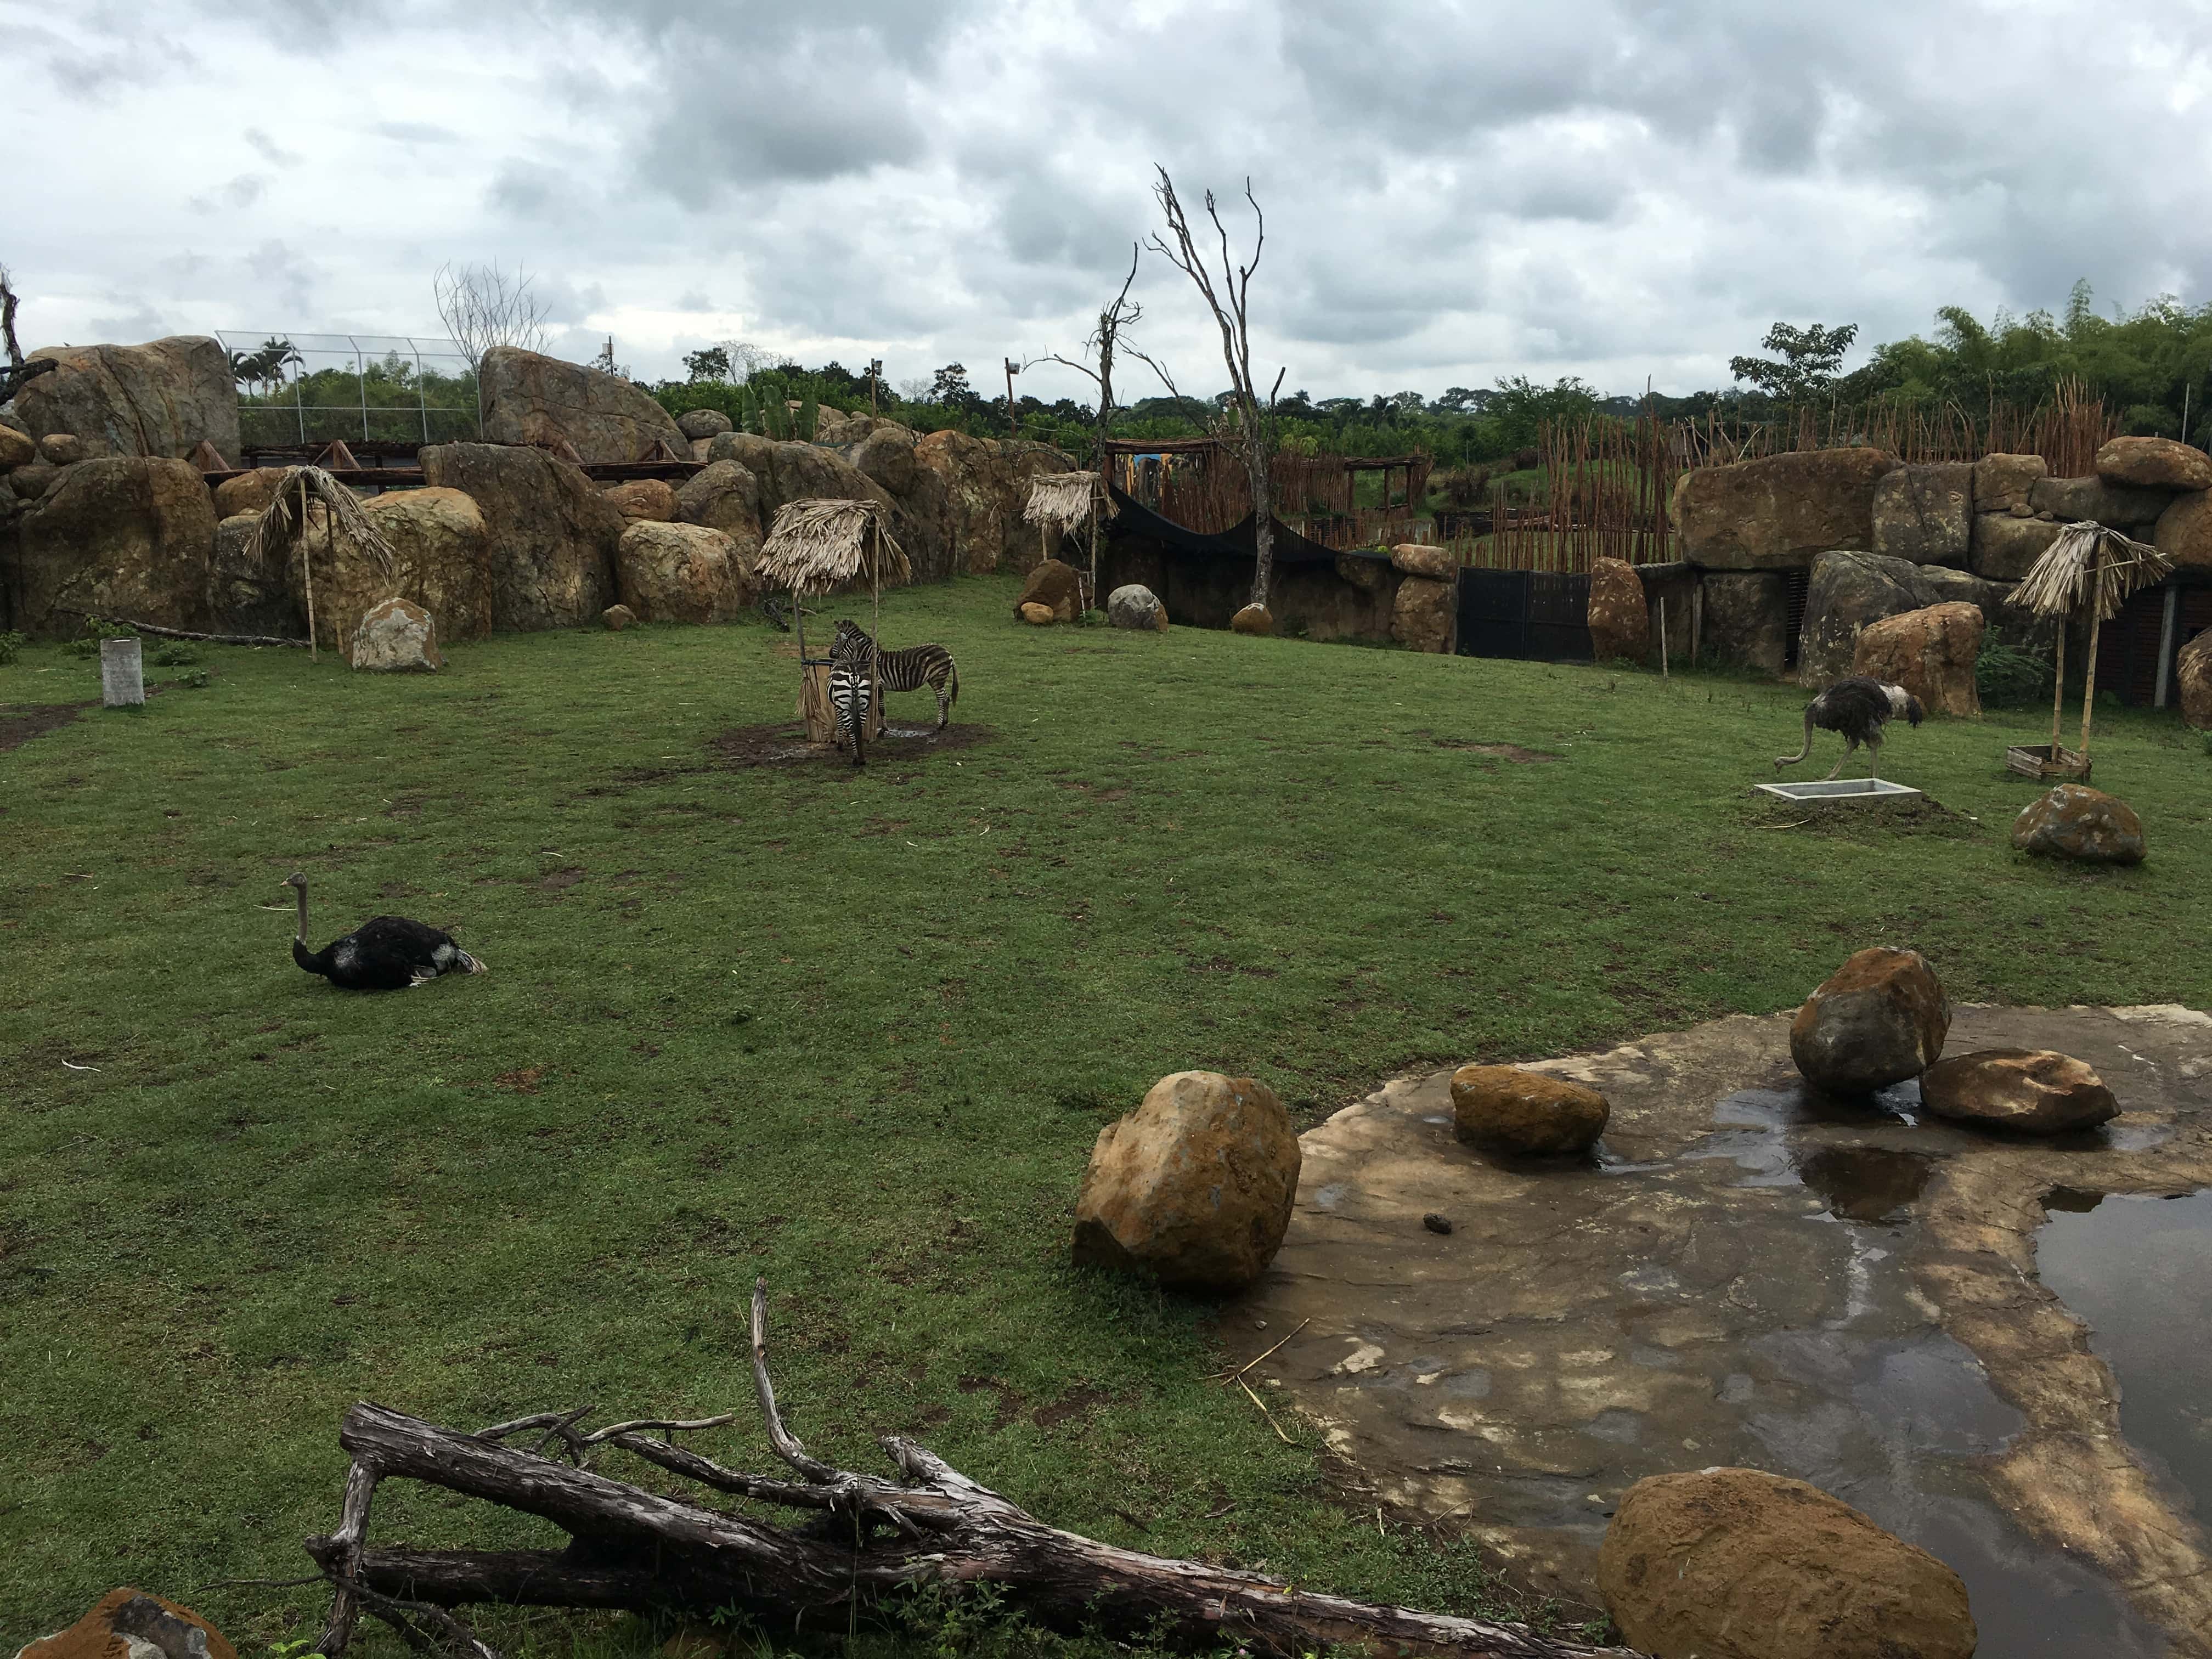 Zebras and ostriches in the African Savanna at Bioparque Ukumarí in Risaralda, Colombia